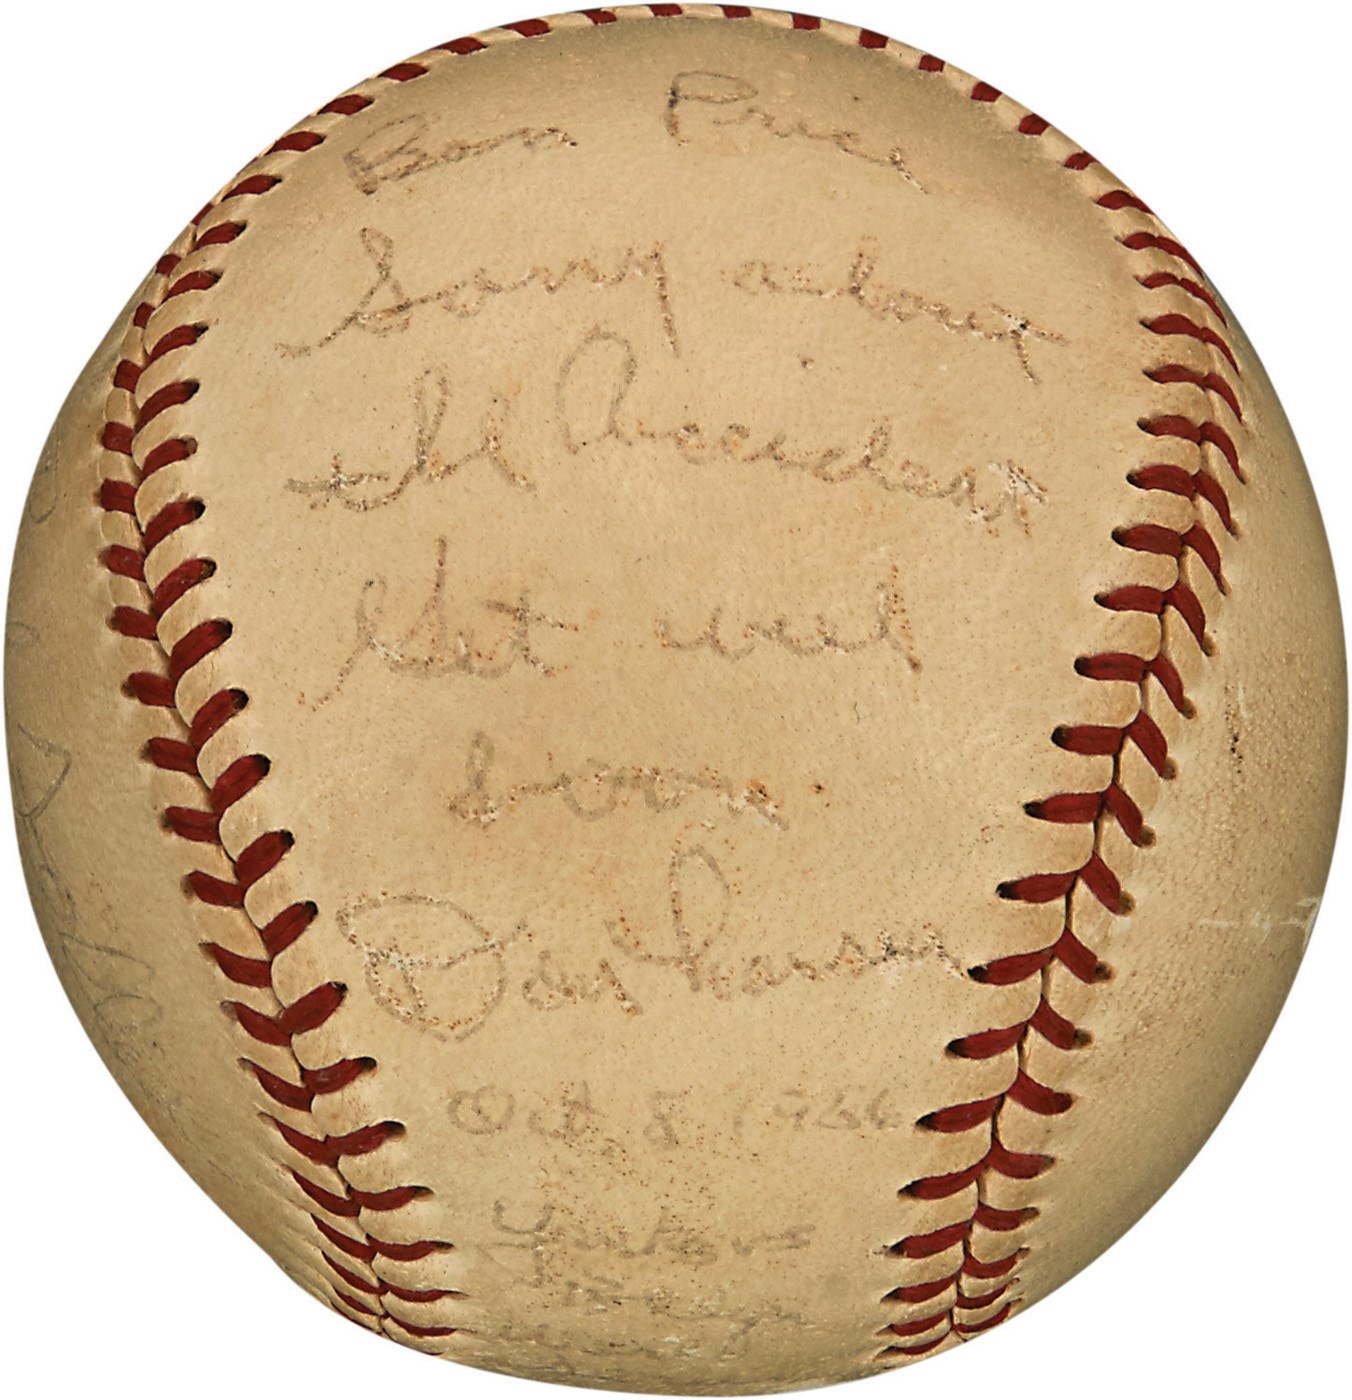 - 1956 Don Larsen Perfect Game Baseball with Incredible Provenance